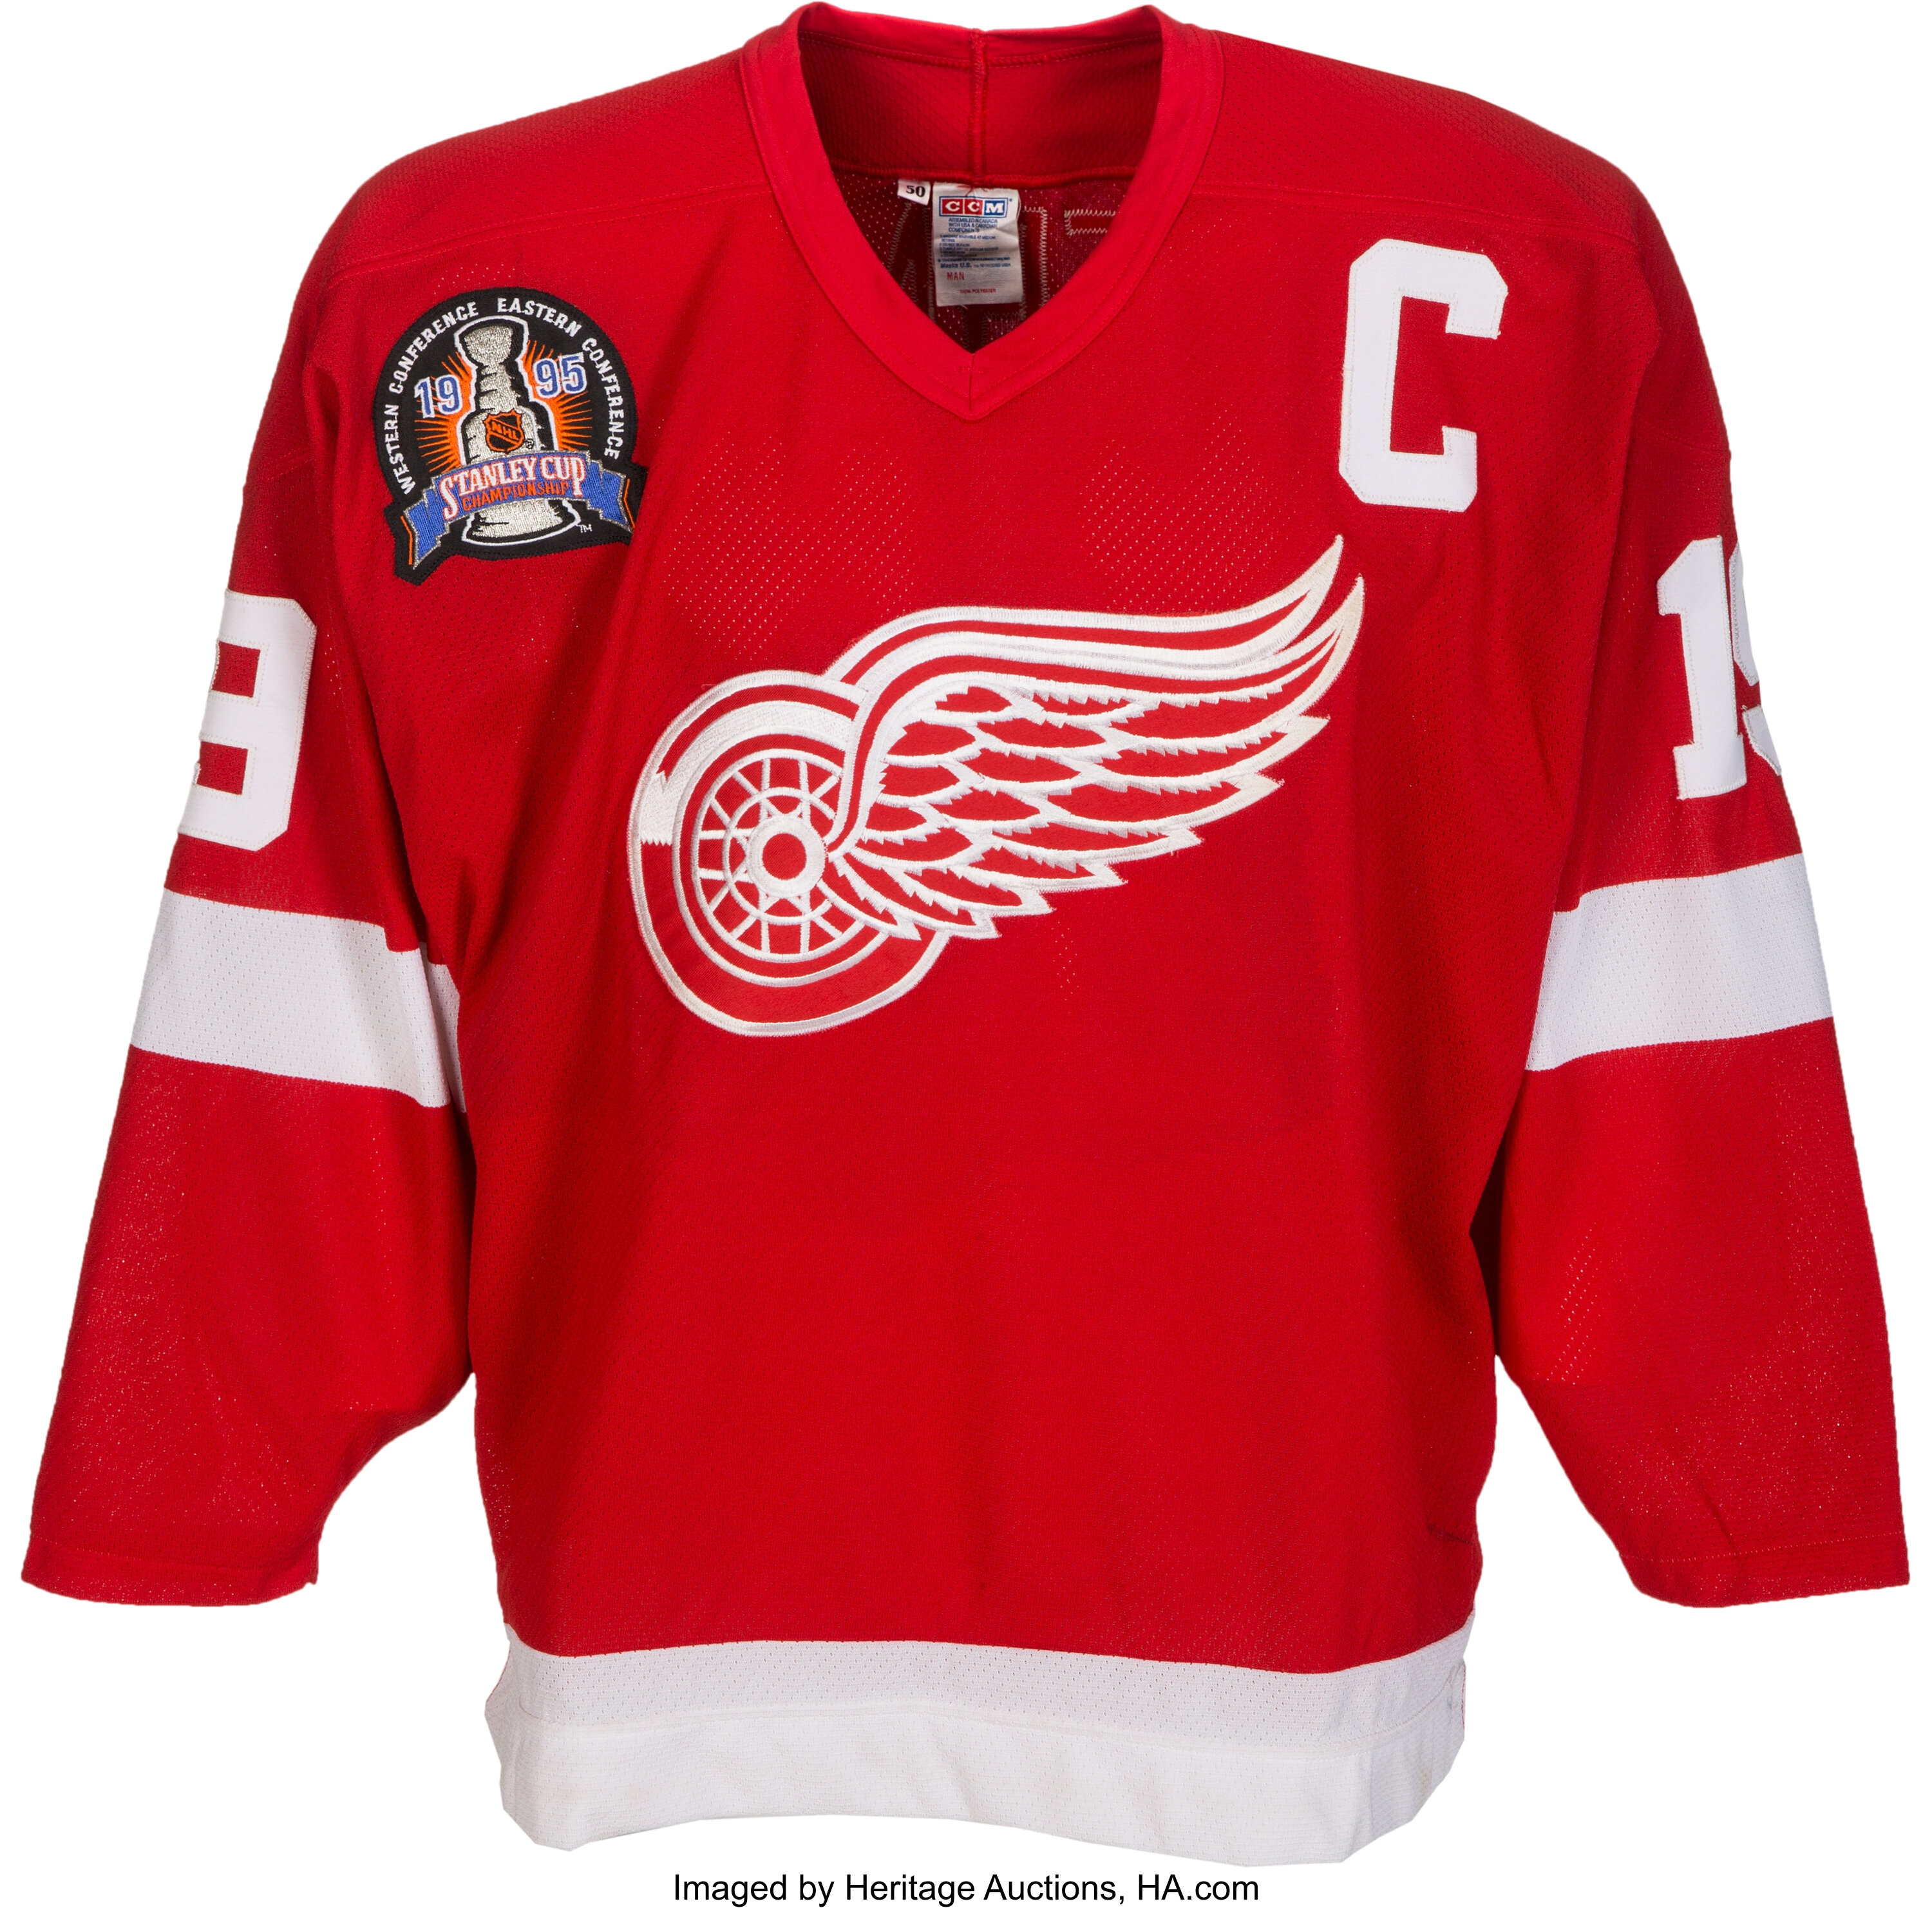 Spirit of Detroit wearing its very own Detroit RedWings Hockey jersey.